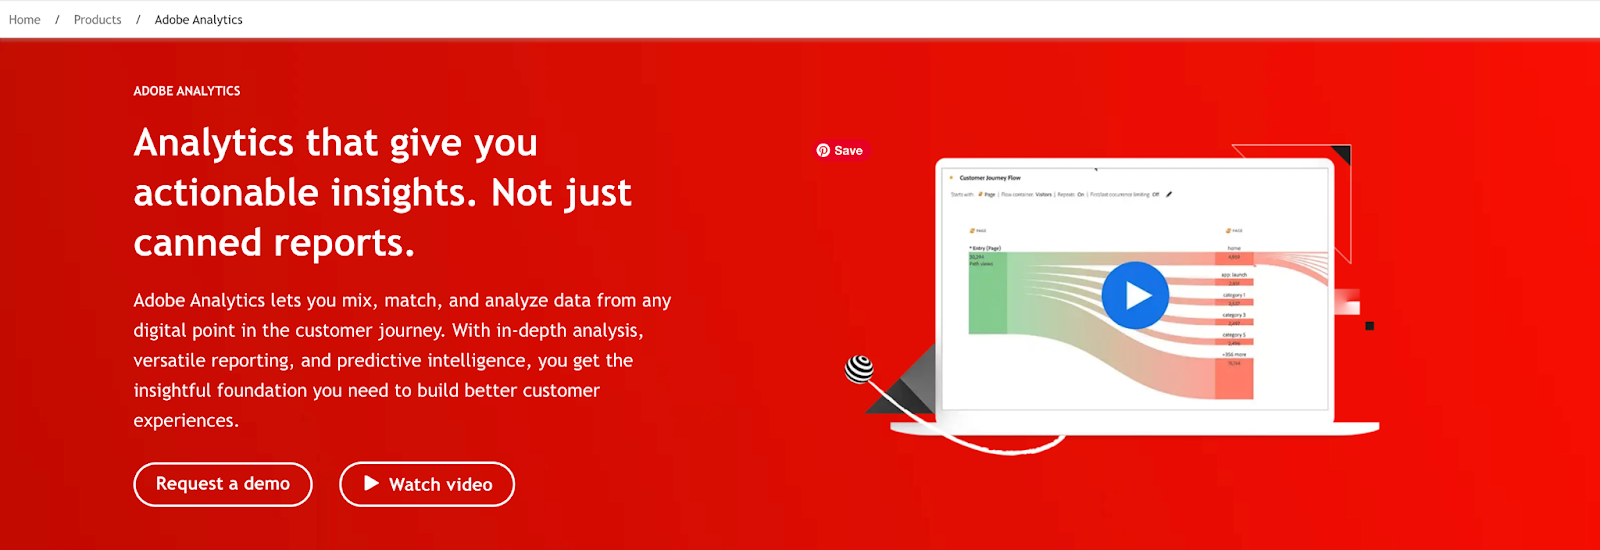 Adobe Analytics ana sayfası